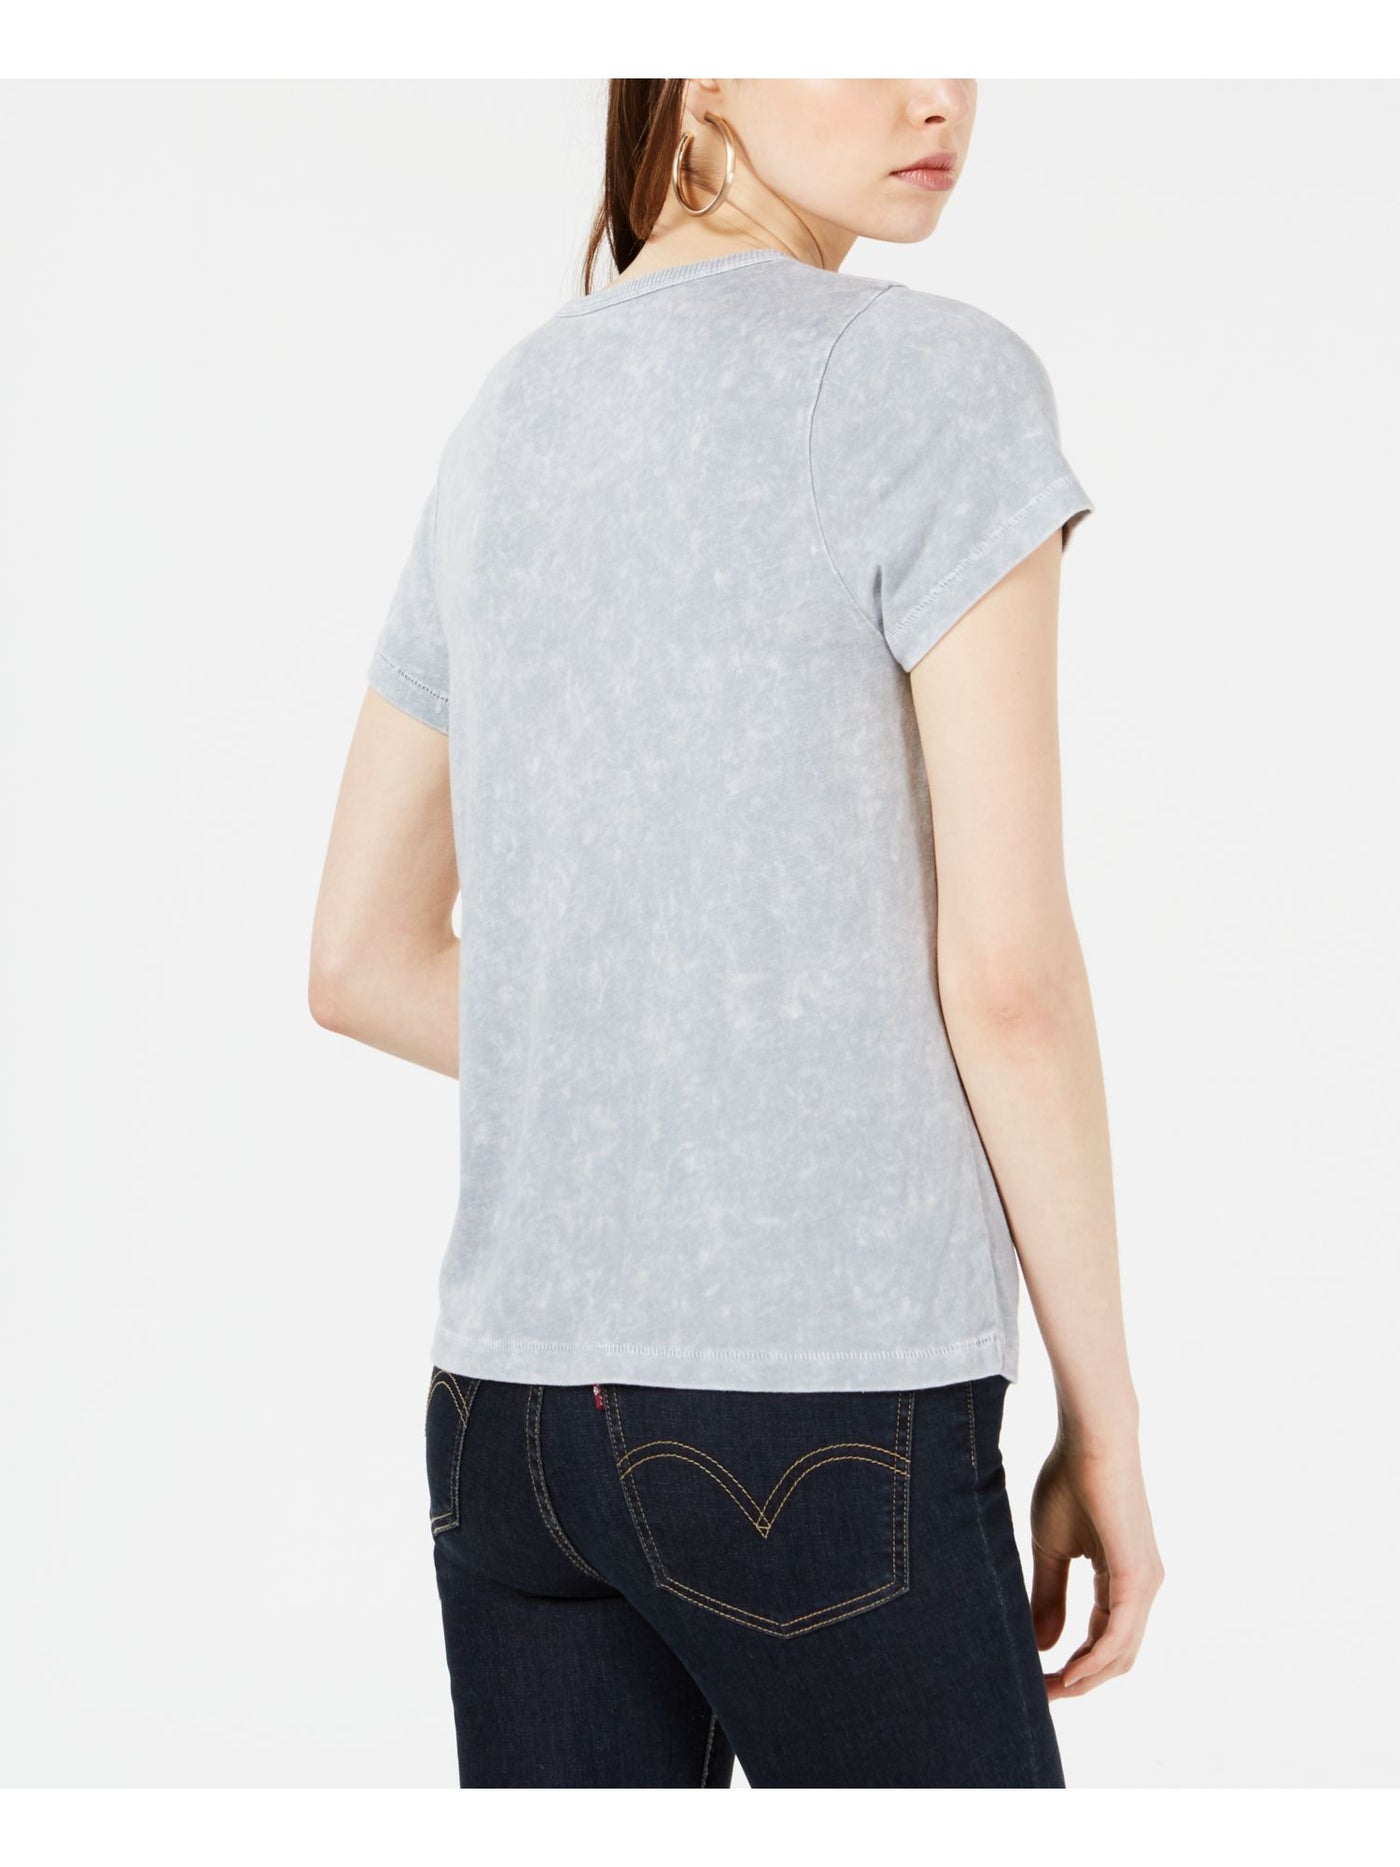 TRUE VINTAGE Womens Gray Printed Short Sleeve Crew Neck T-Shirt Size: XS